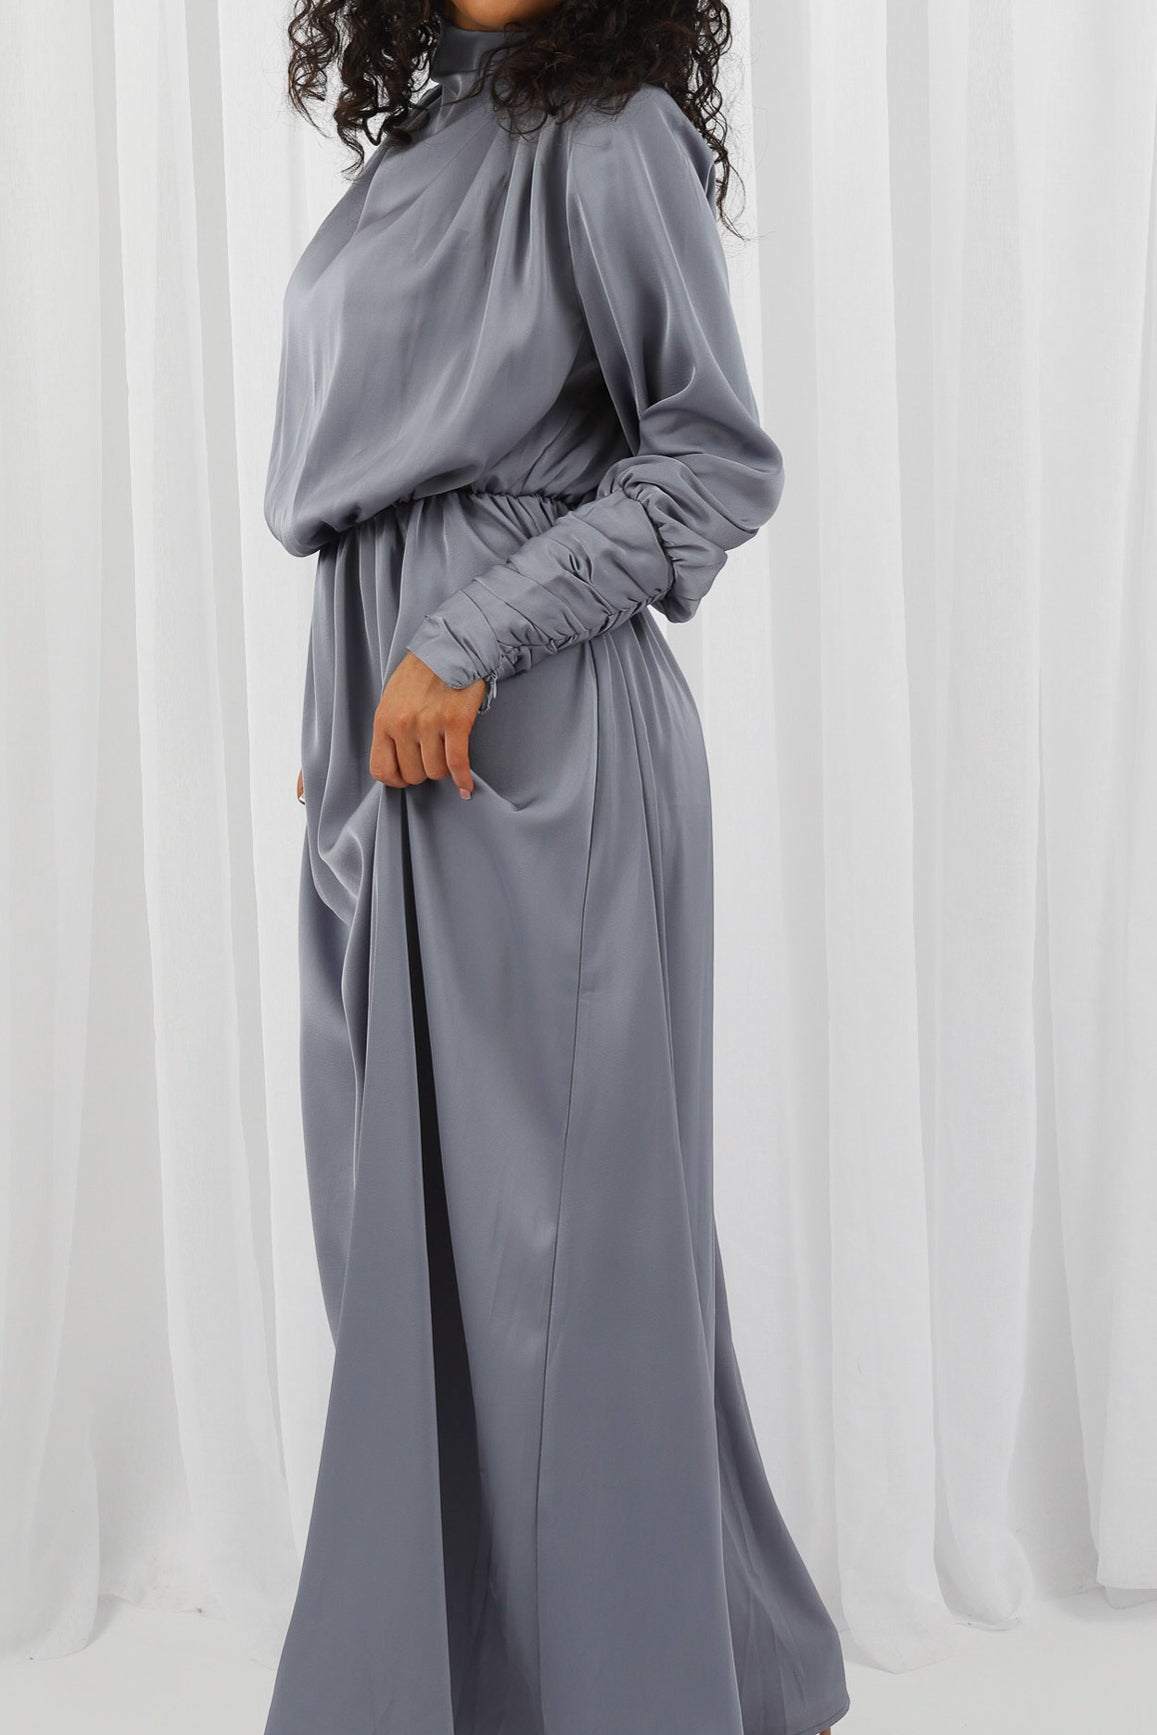 M7913SilverPurple-dress-abaya